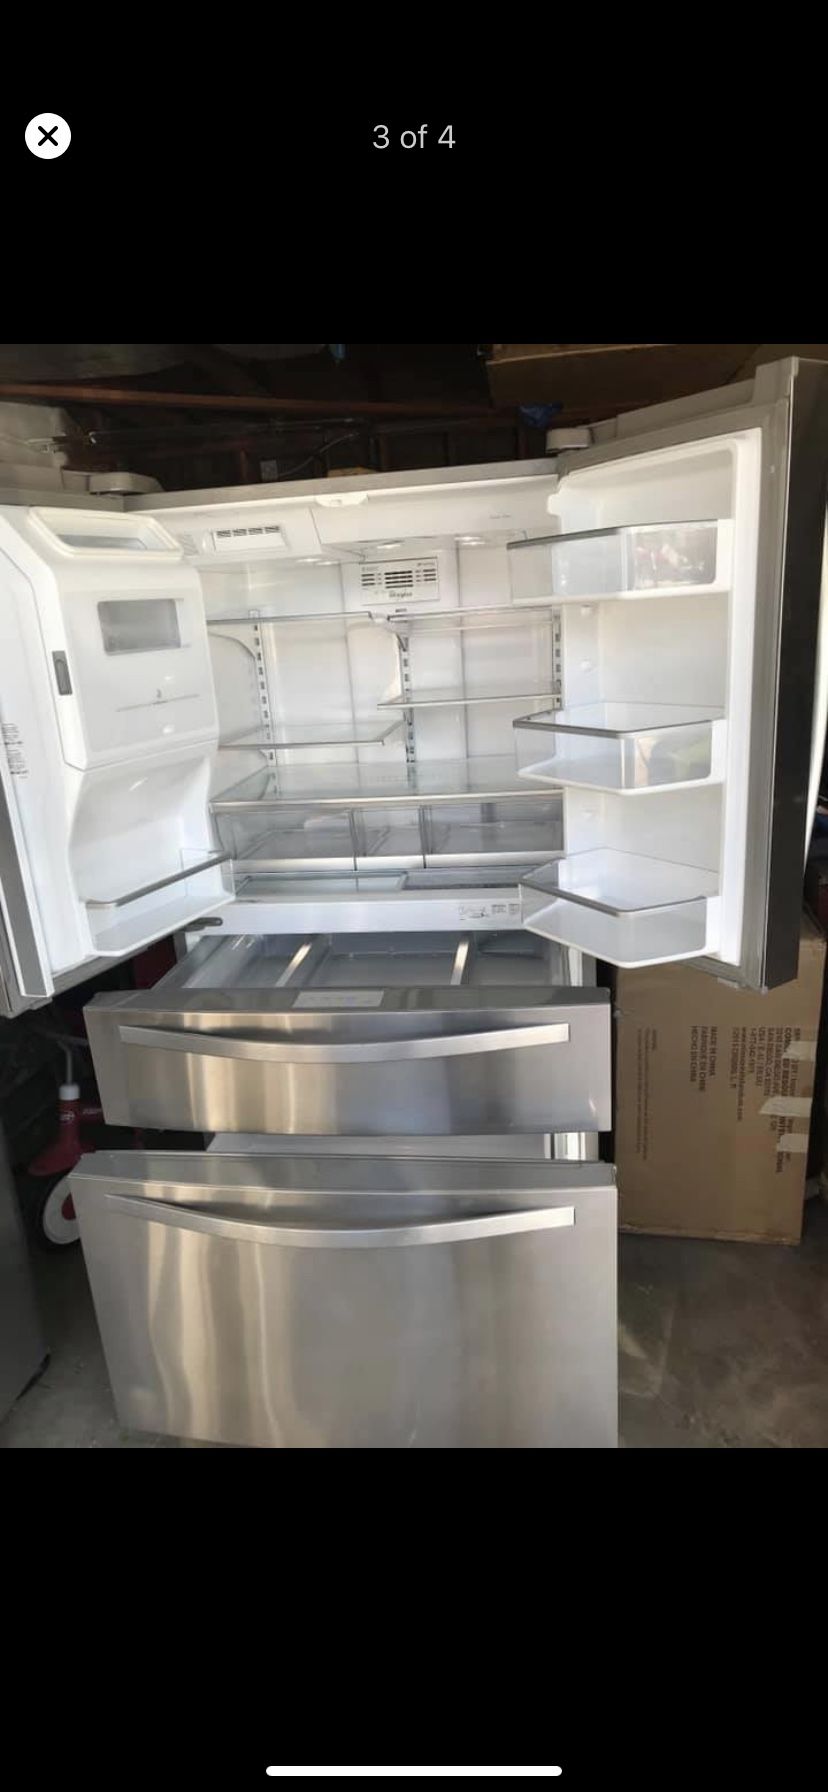 Appliances whirlpool fridge